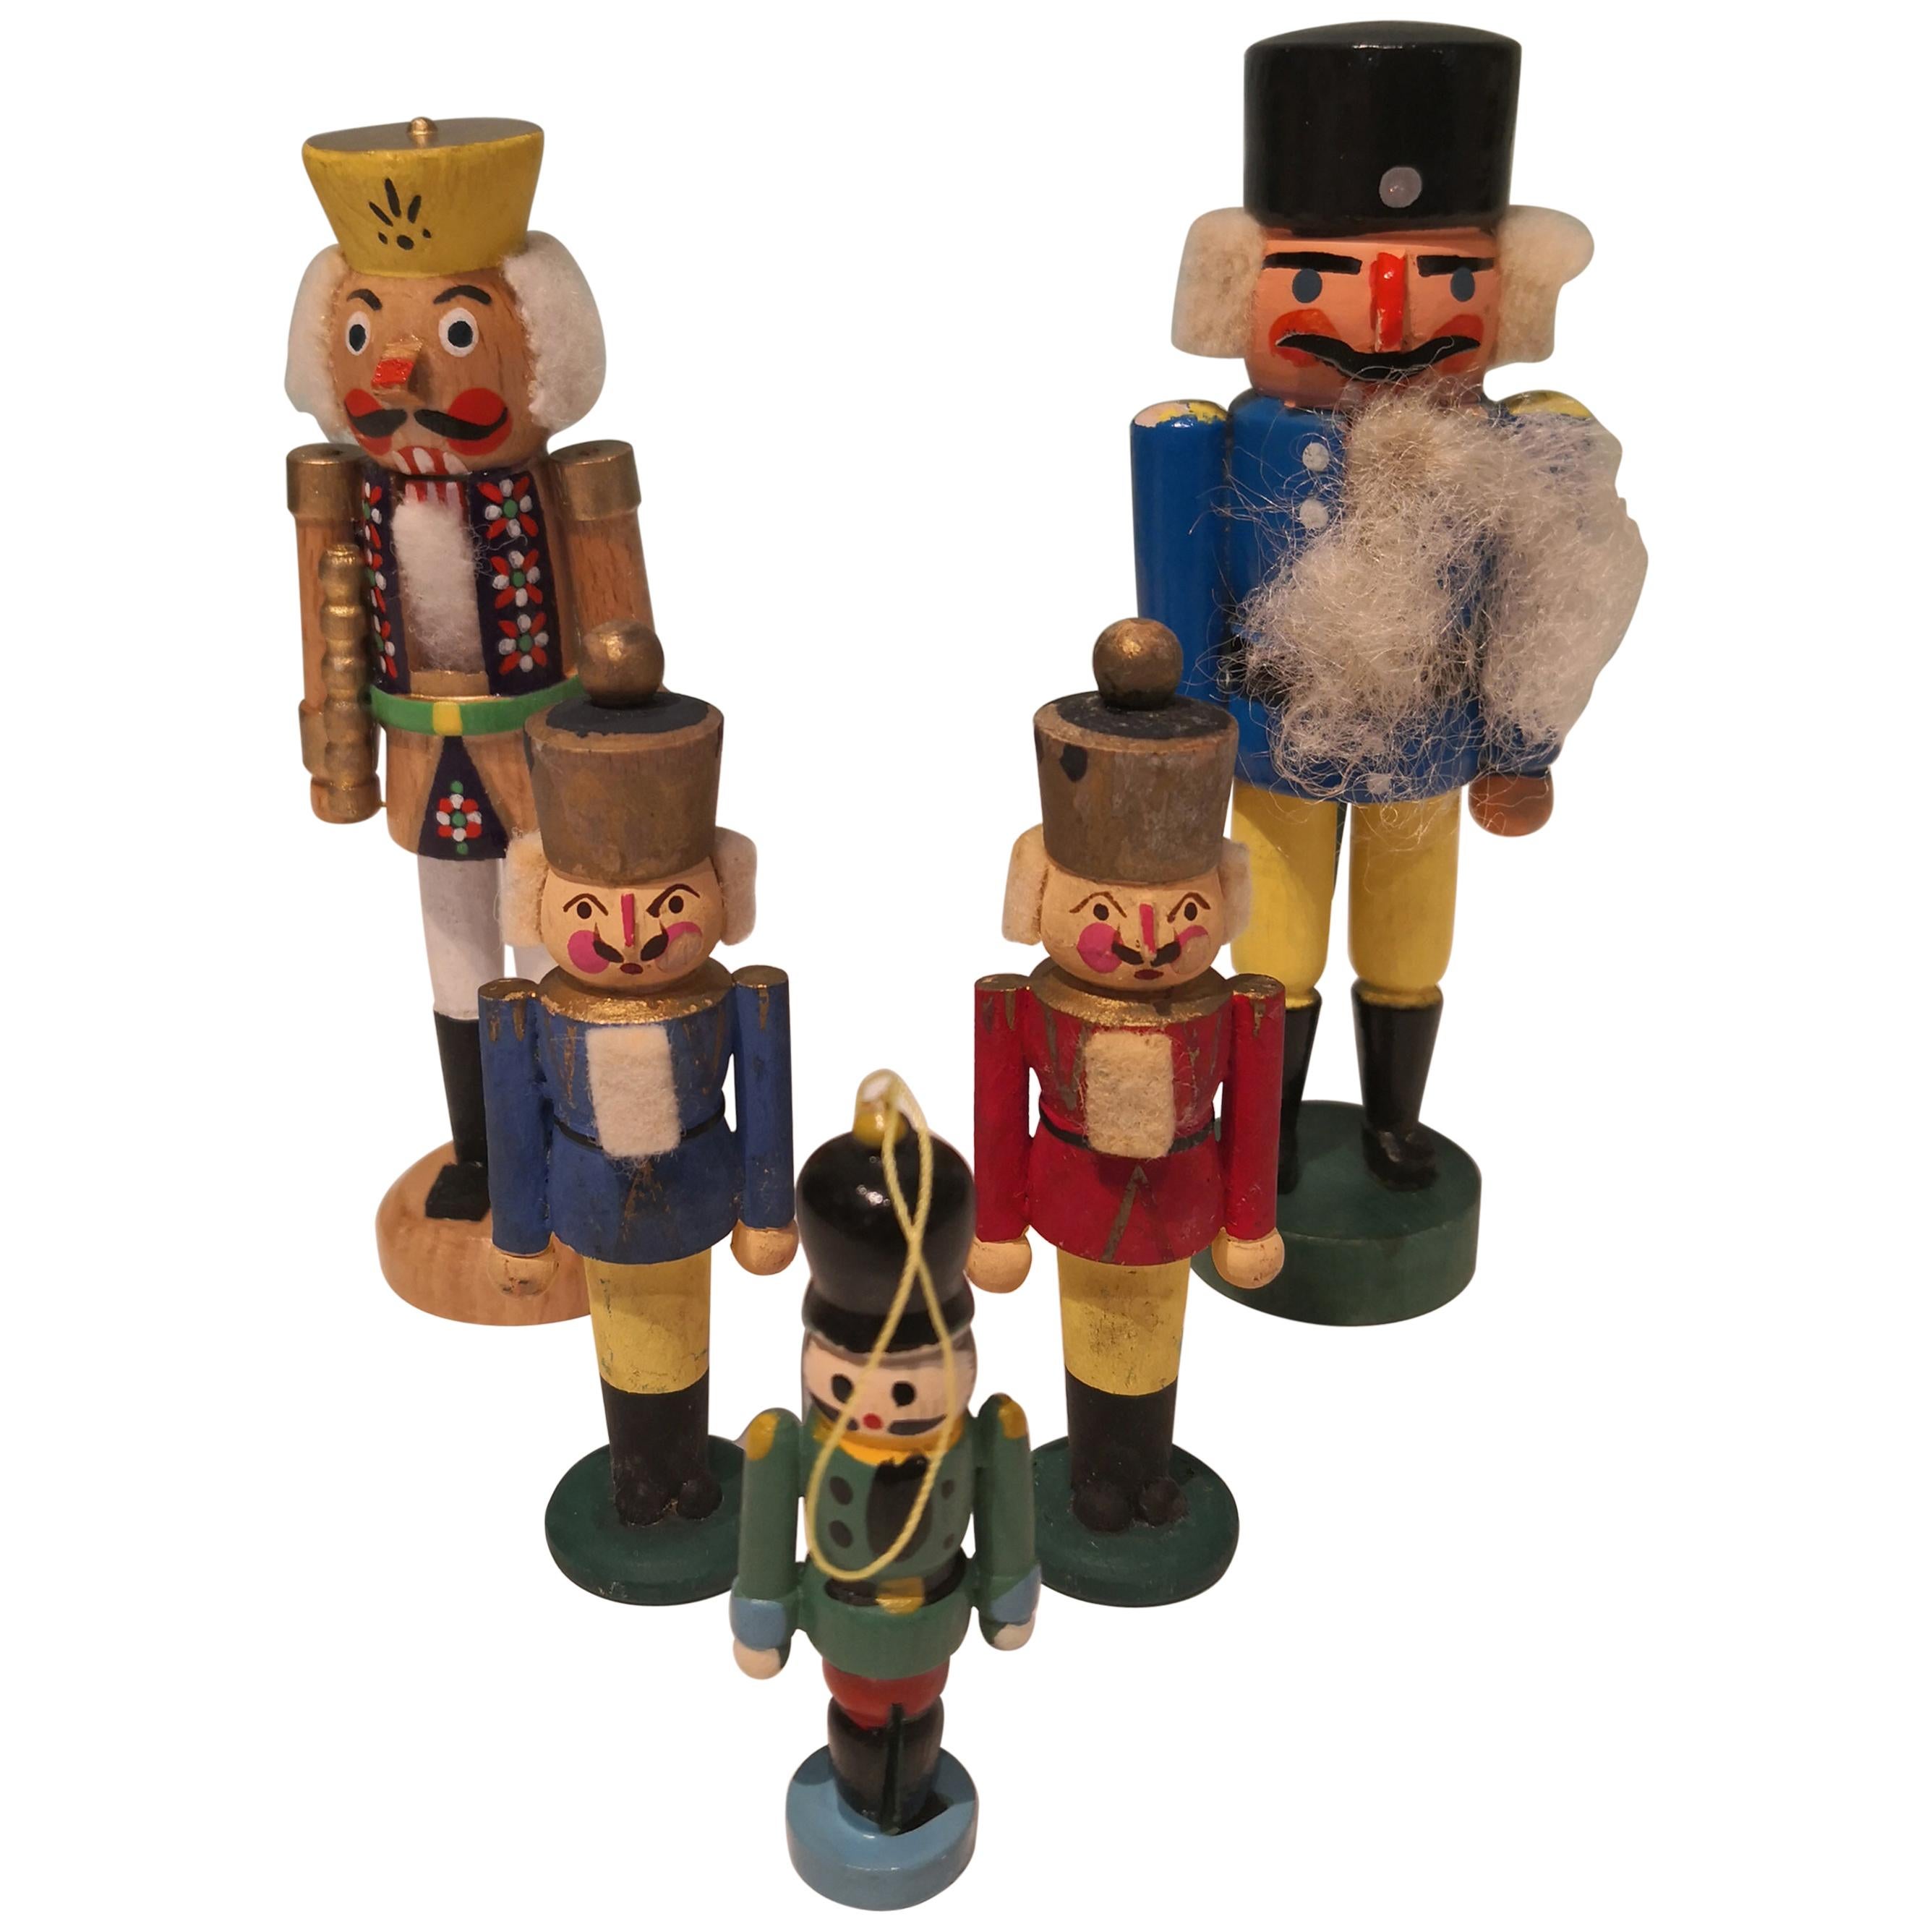 Mid-20th Century Set of Five Christmas Santa Figures from Erzgebirge Germany